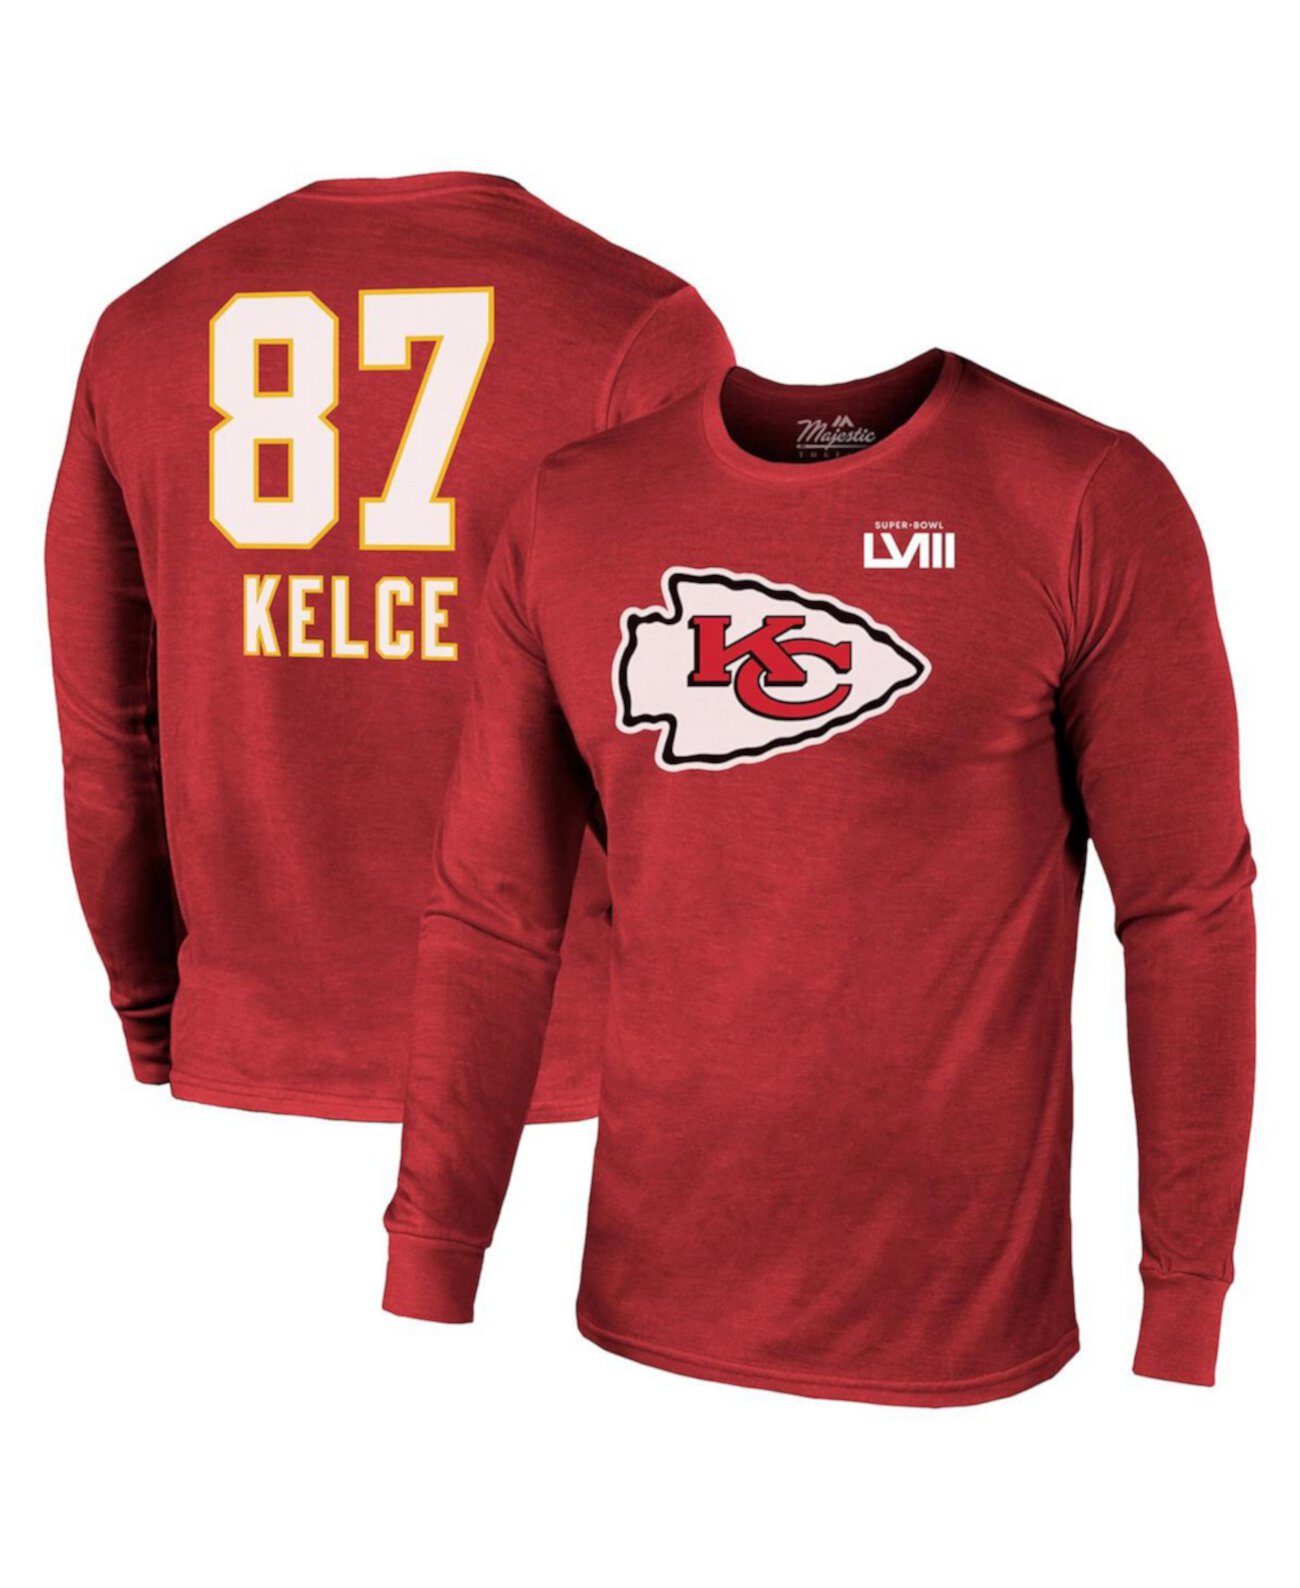 Мужская футболка с длинными рукавами Travis Kelce Red Kansas City Chiefs Super Bowl LVIII, имя и номер, футболка Tri-Blend Majestic